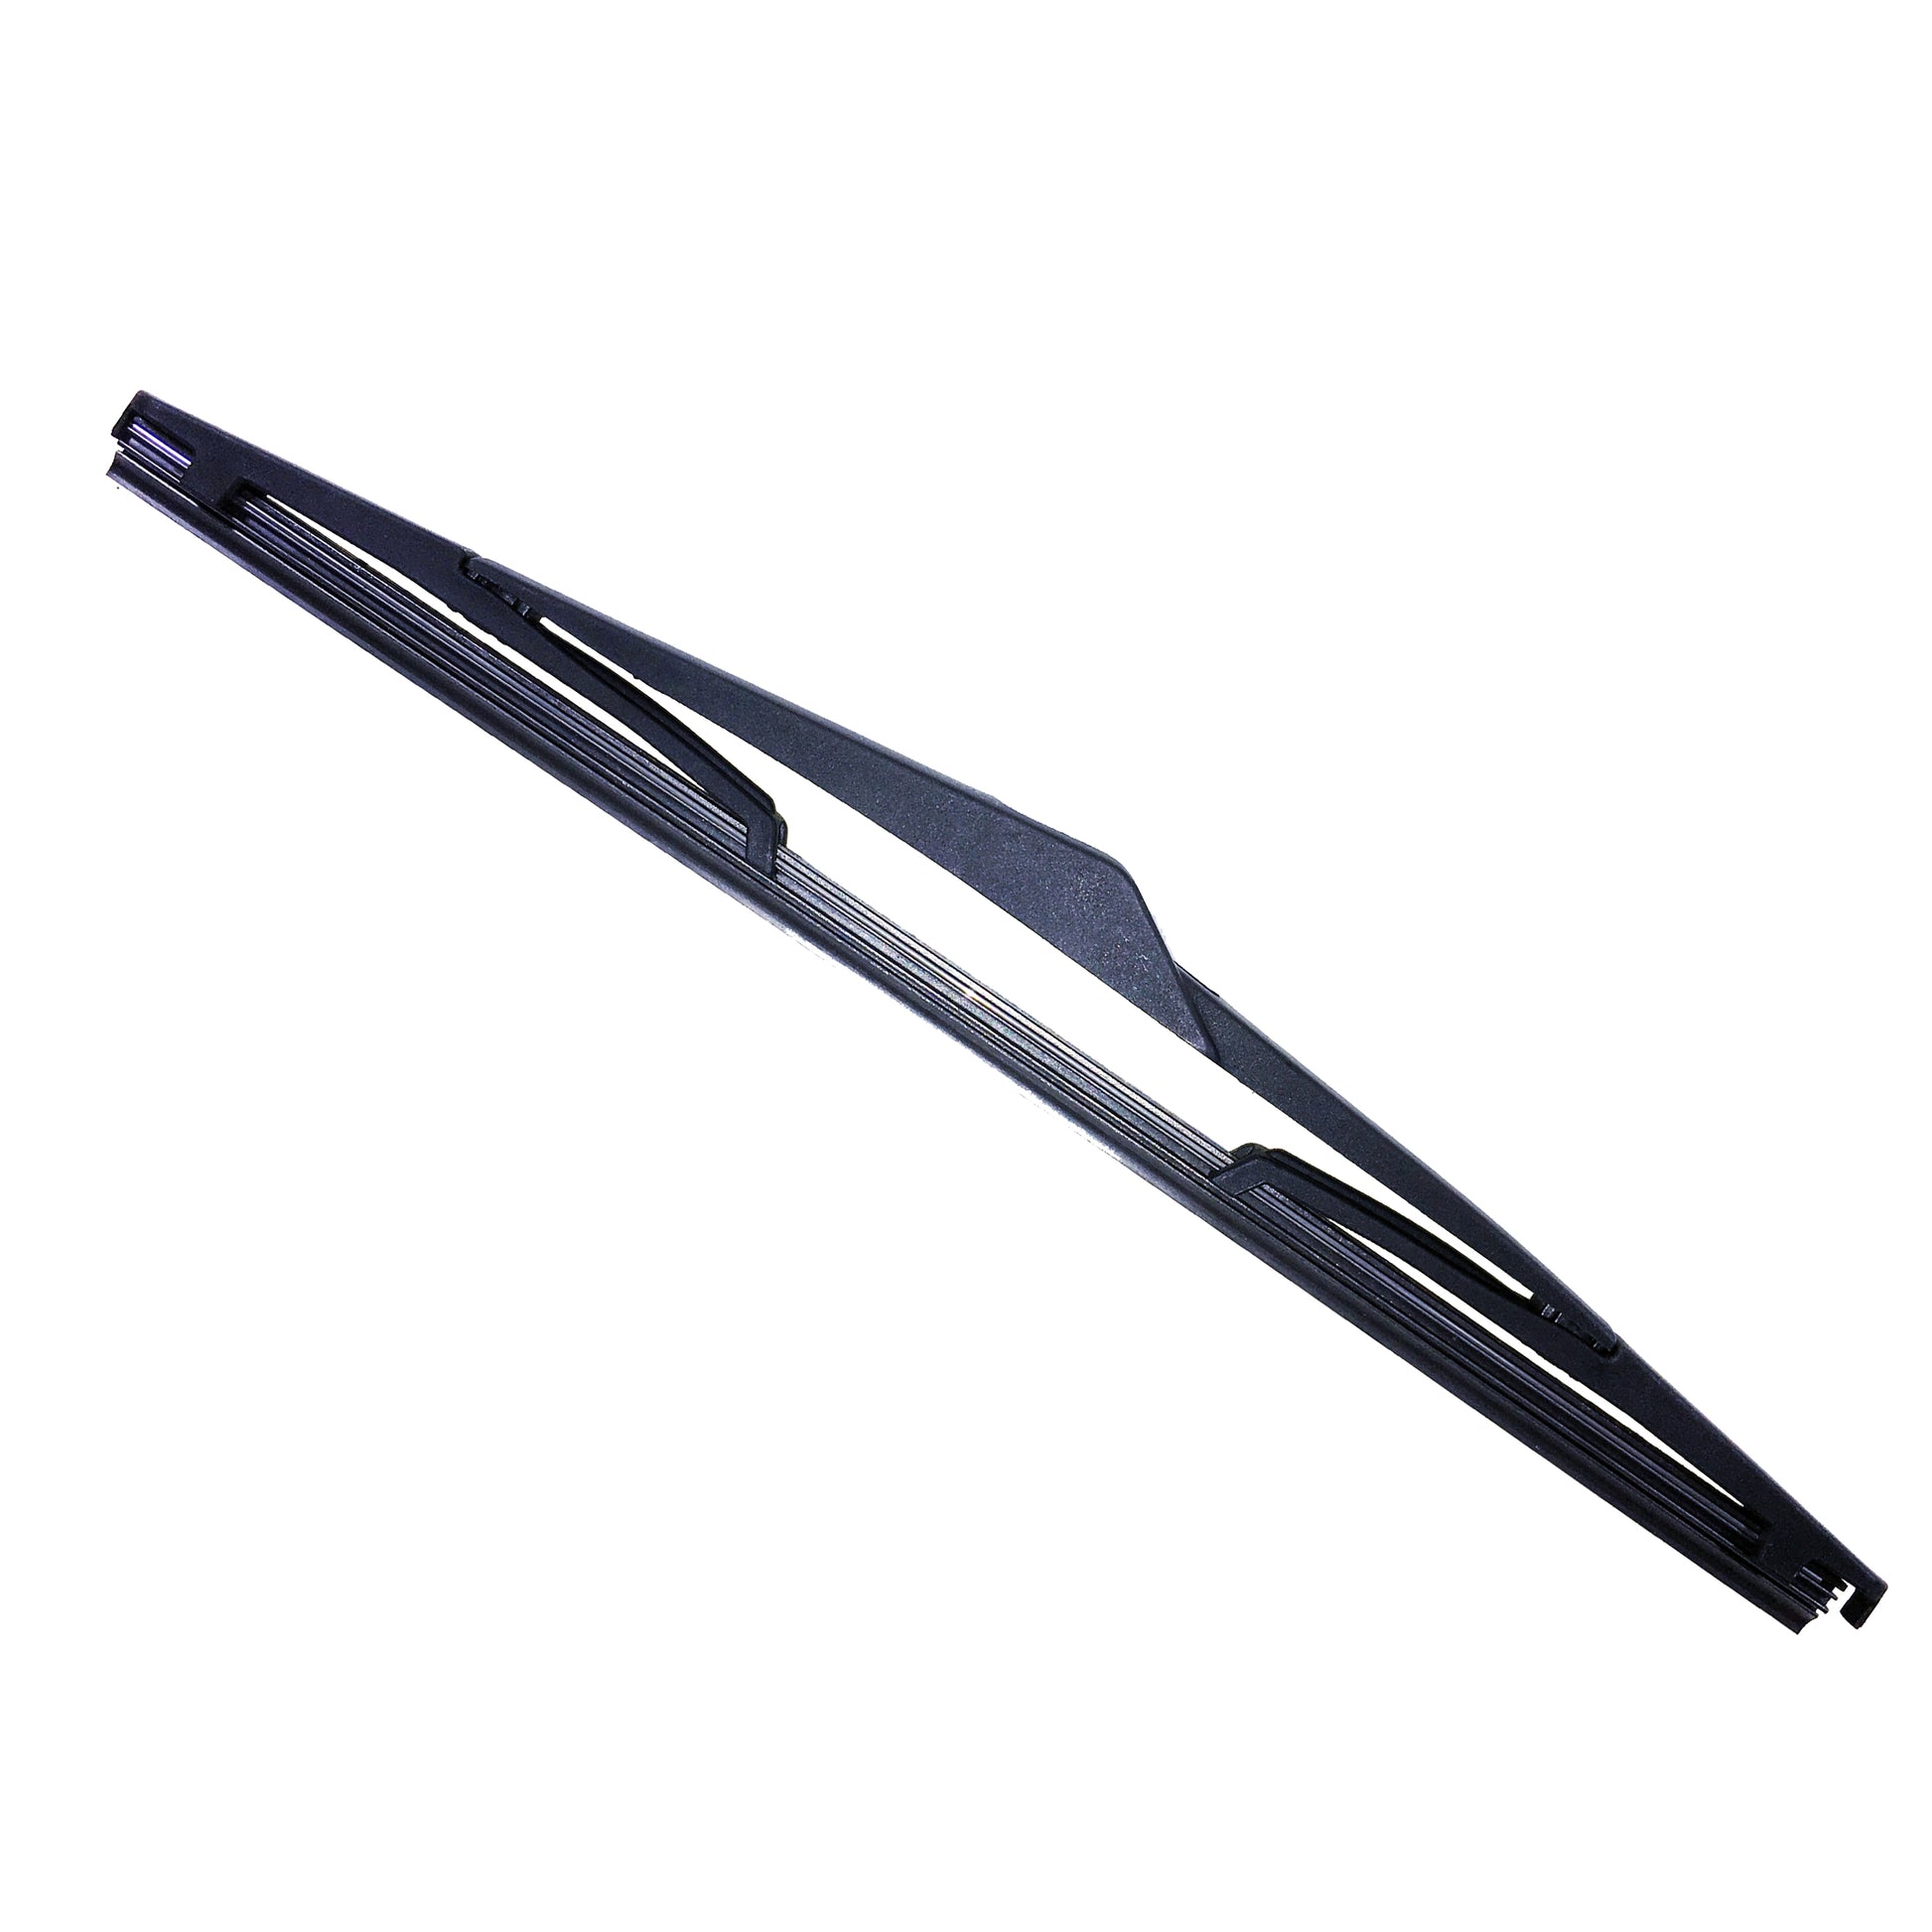 VAUXHALL CORSA E Hatchback Oct 2014 to Nov 2019Rear Wiper Blade 